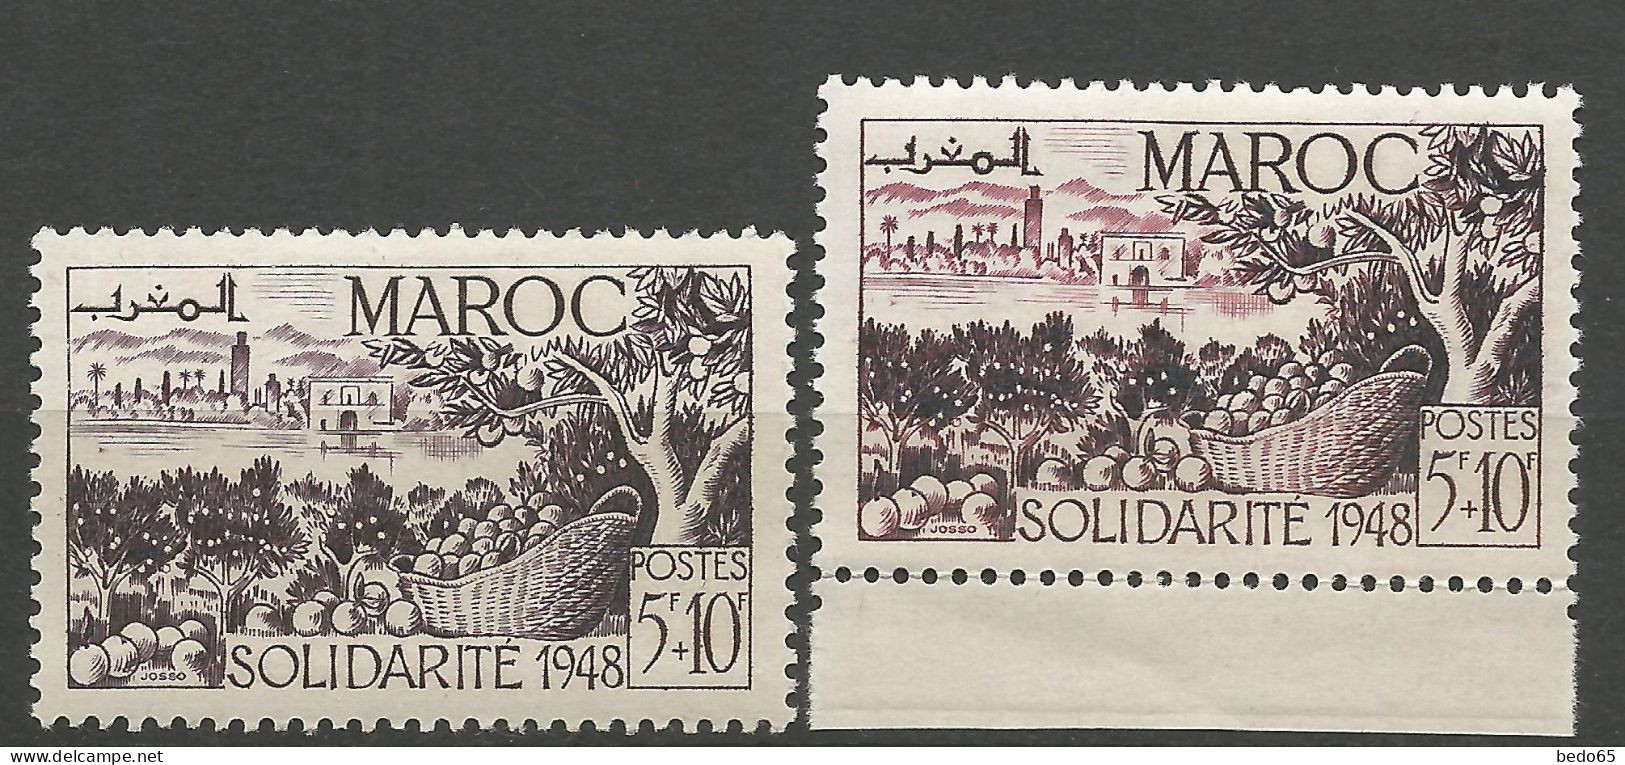 MAROC N° 274 Variétée Sans La Couleur Rose NEUF** LUXE SANS CHARNIERE NI TRACE  / Hingeless  / MNH - Unused Stamps